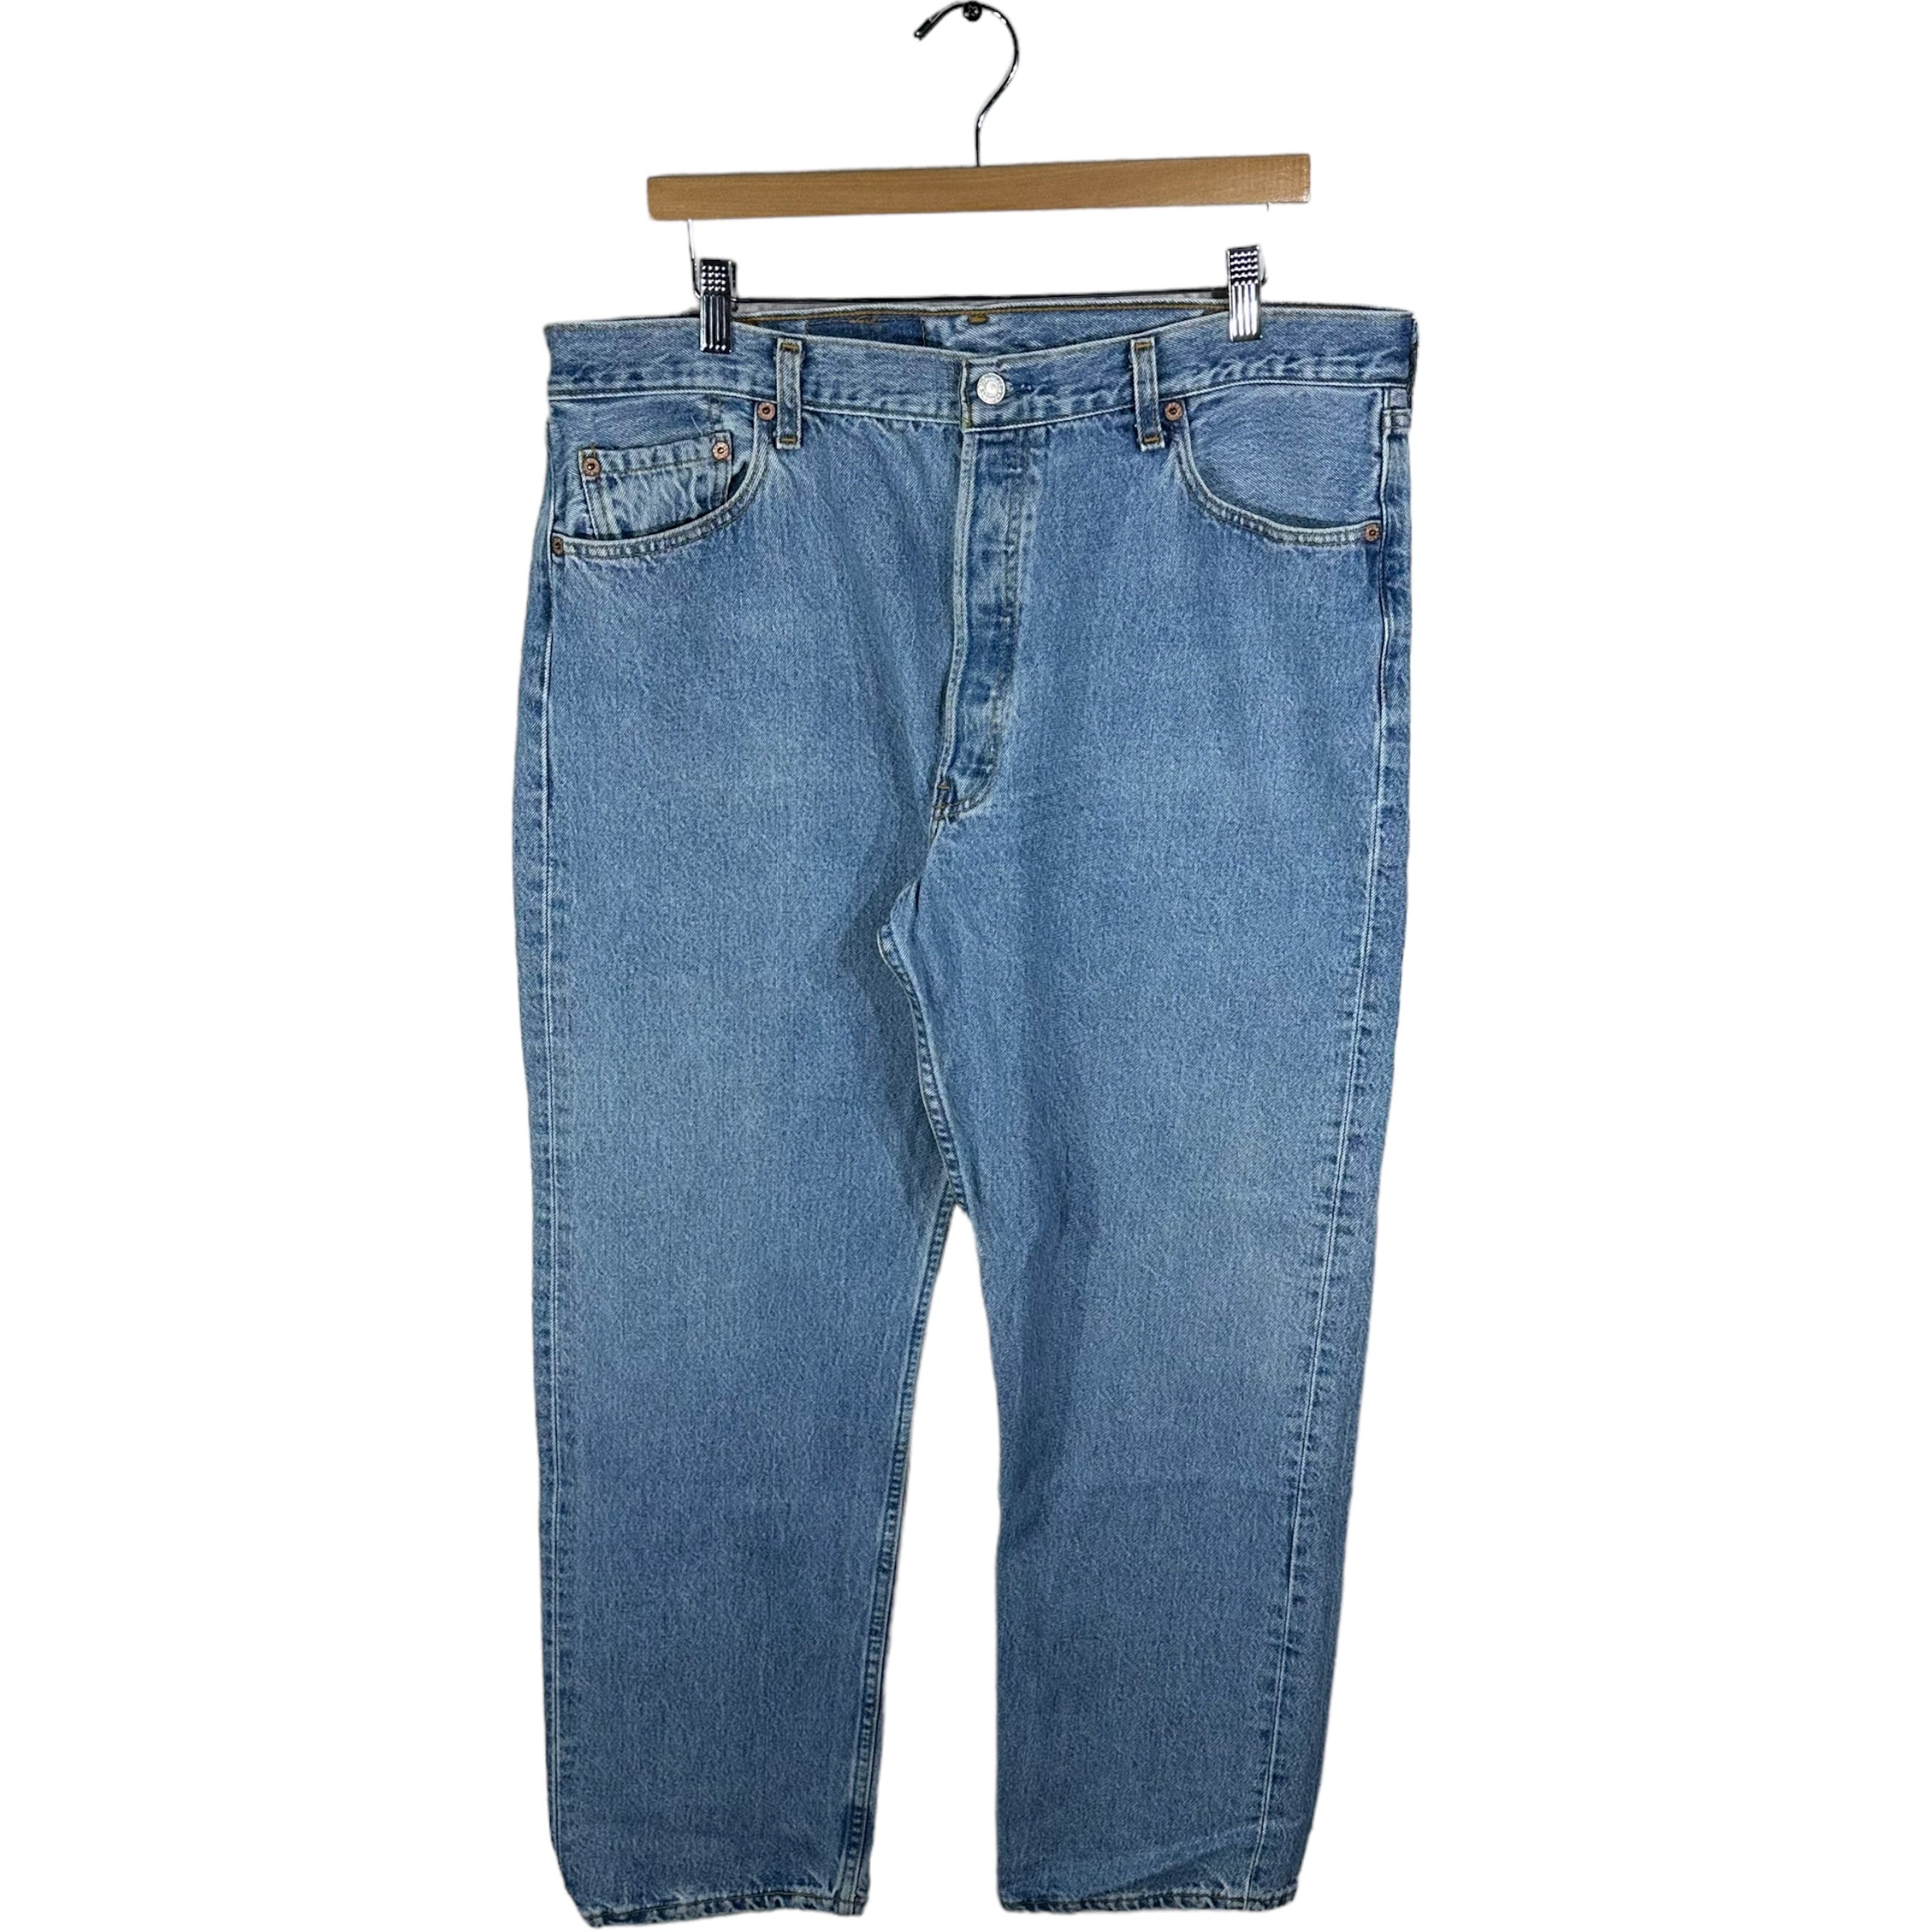 Vintage Levi's 501 Button Fly Jeans